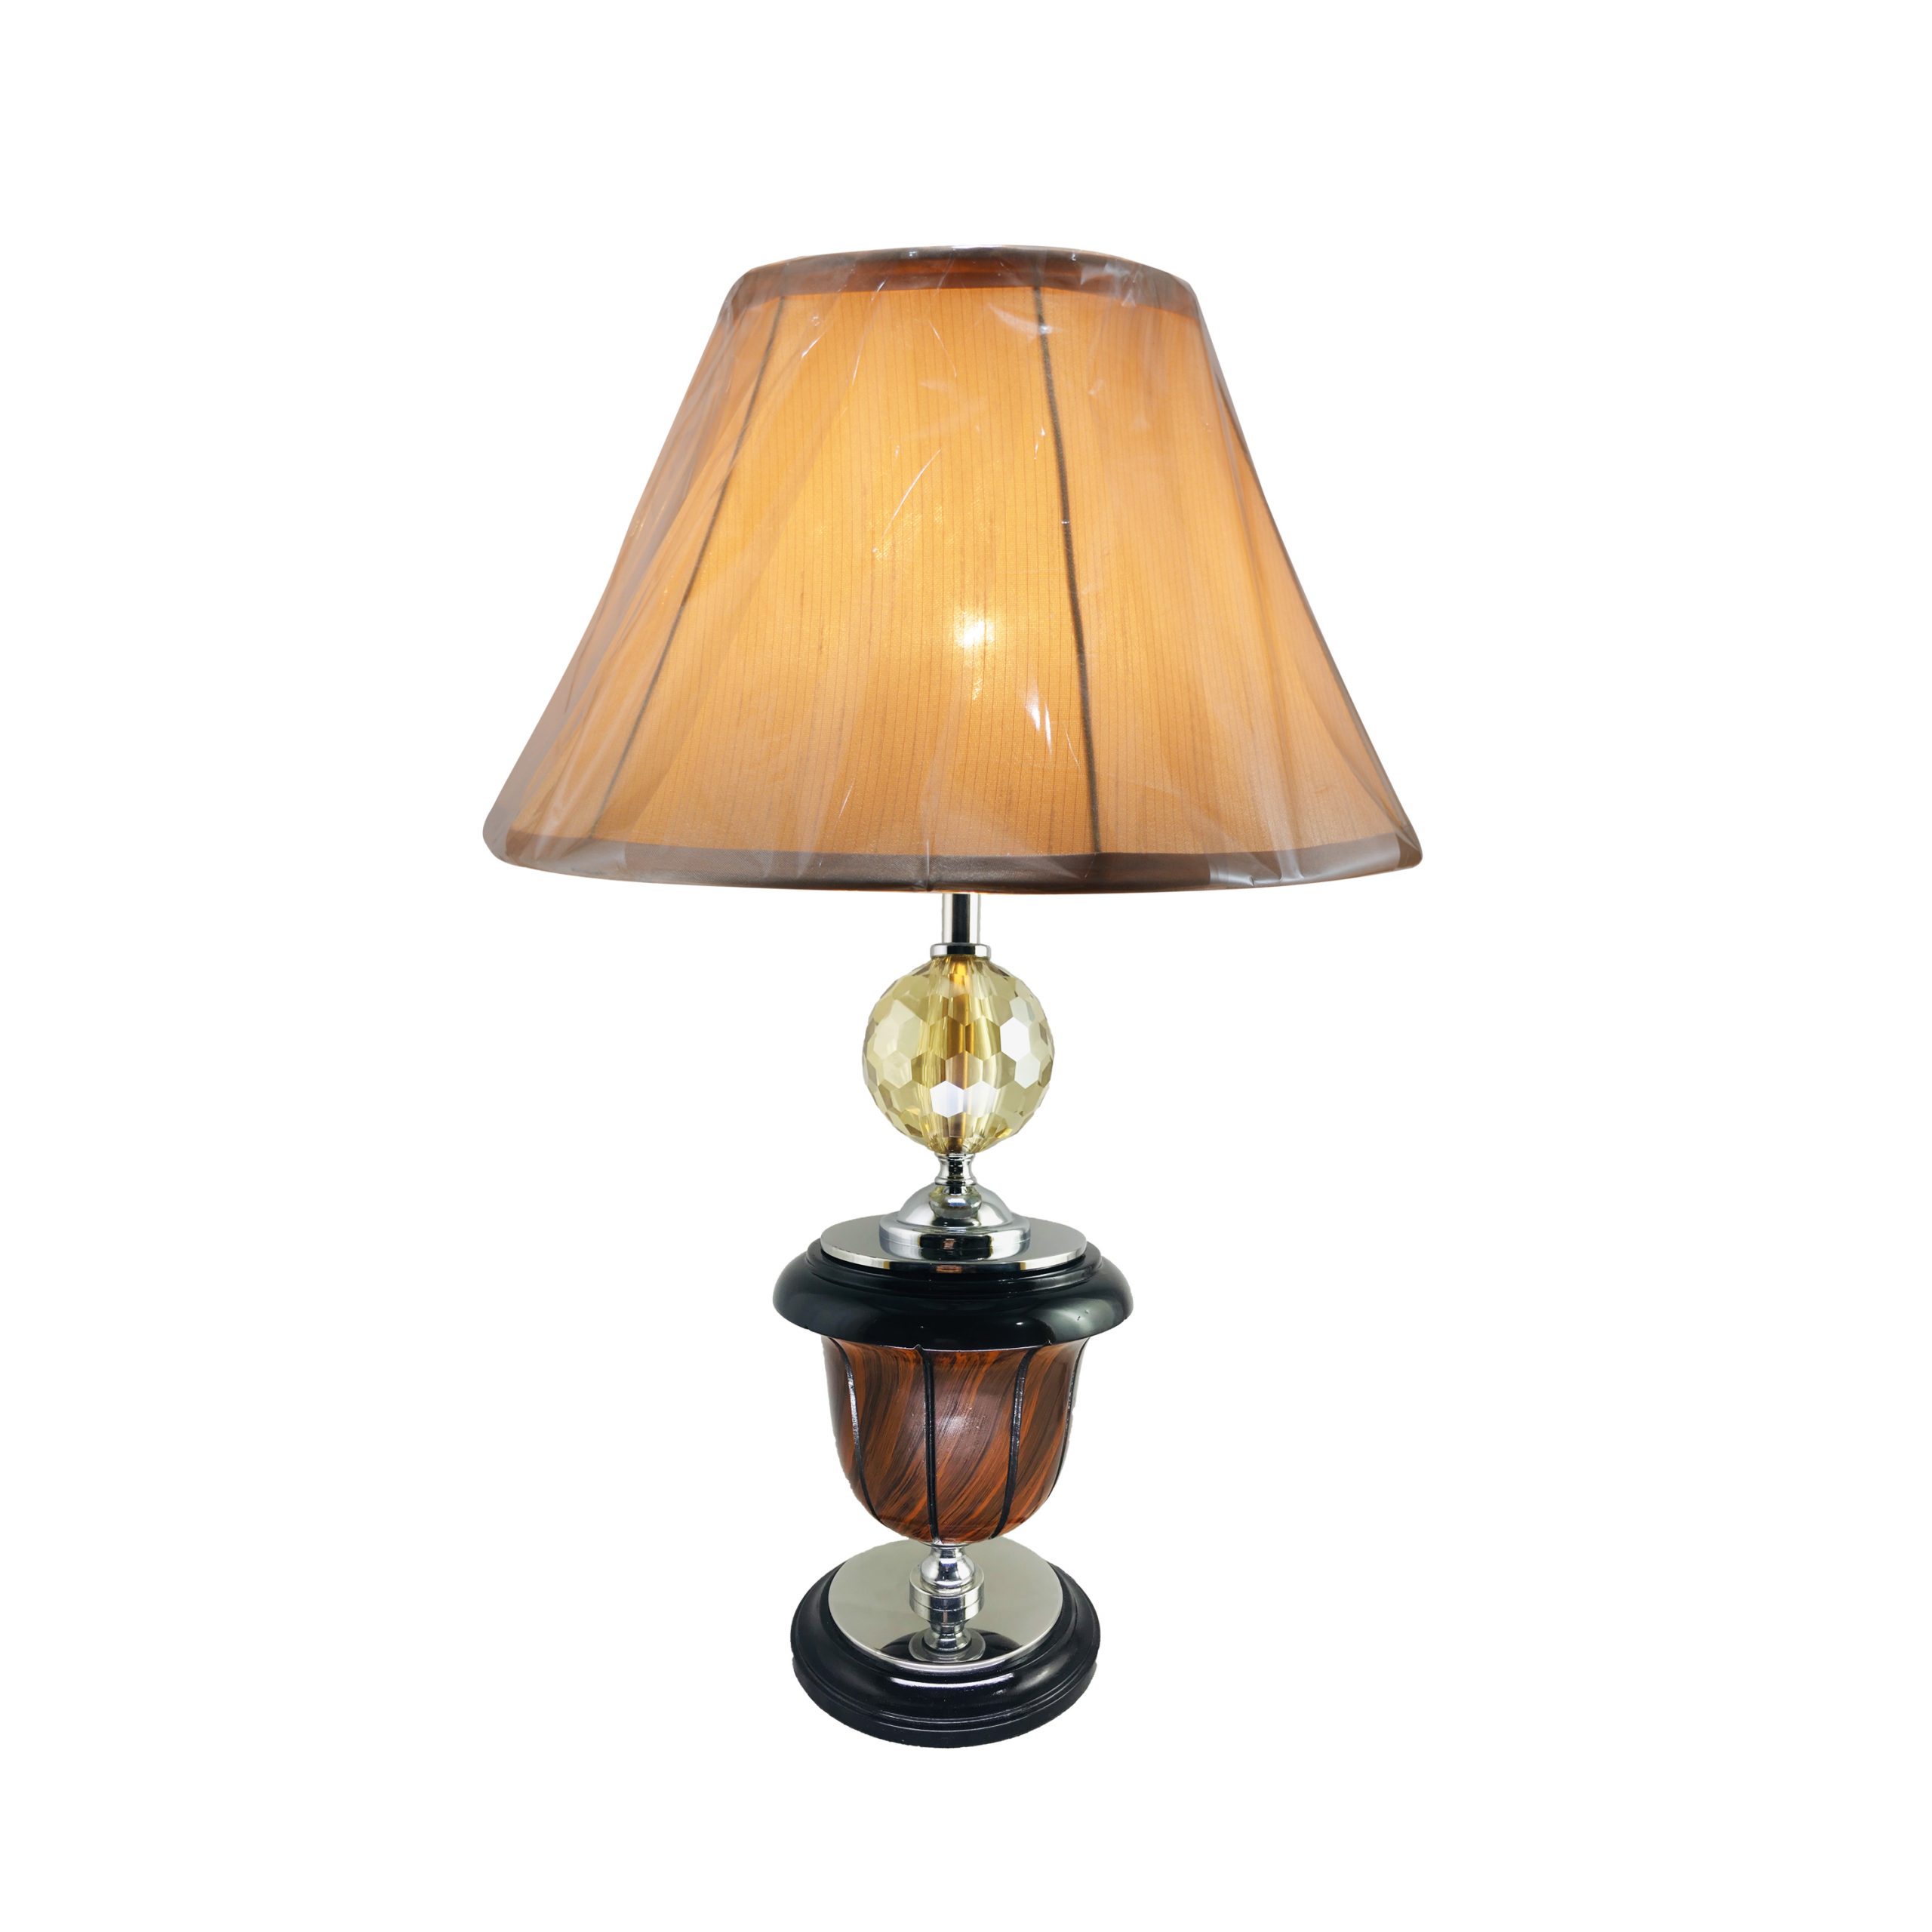 Lamp-5-scaled-1.jpg